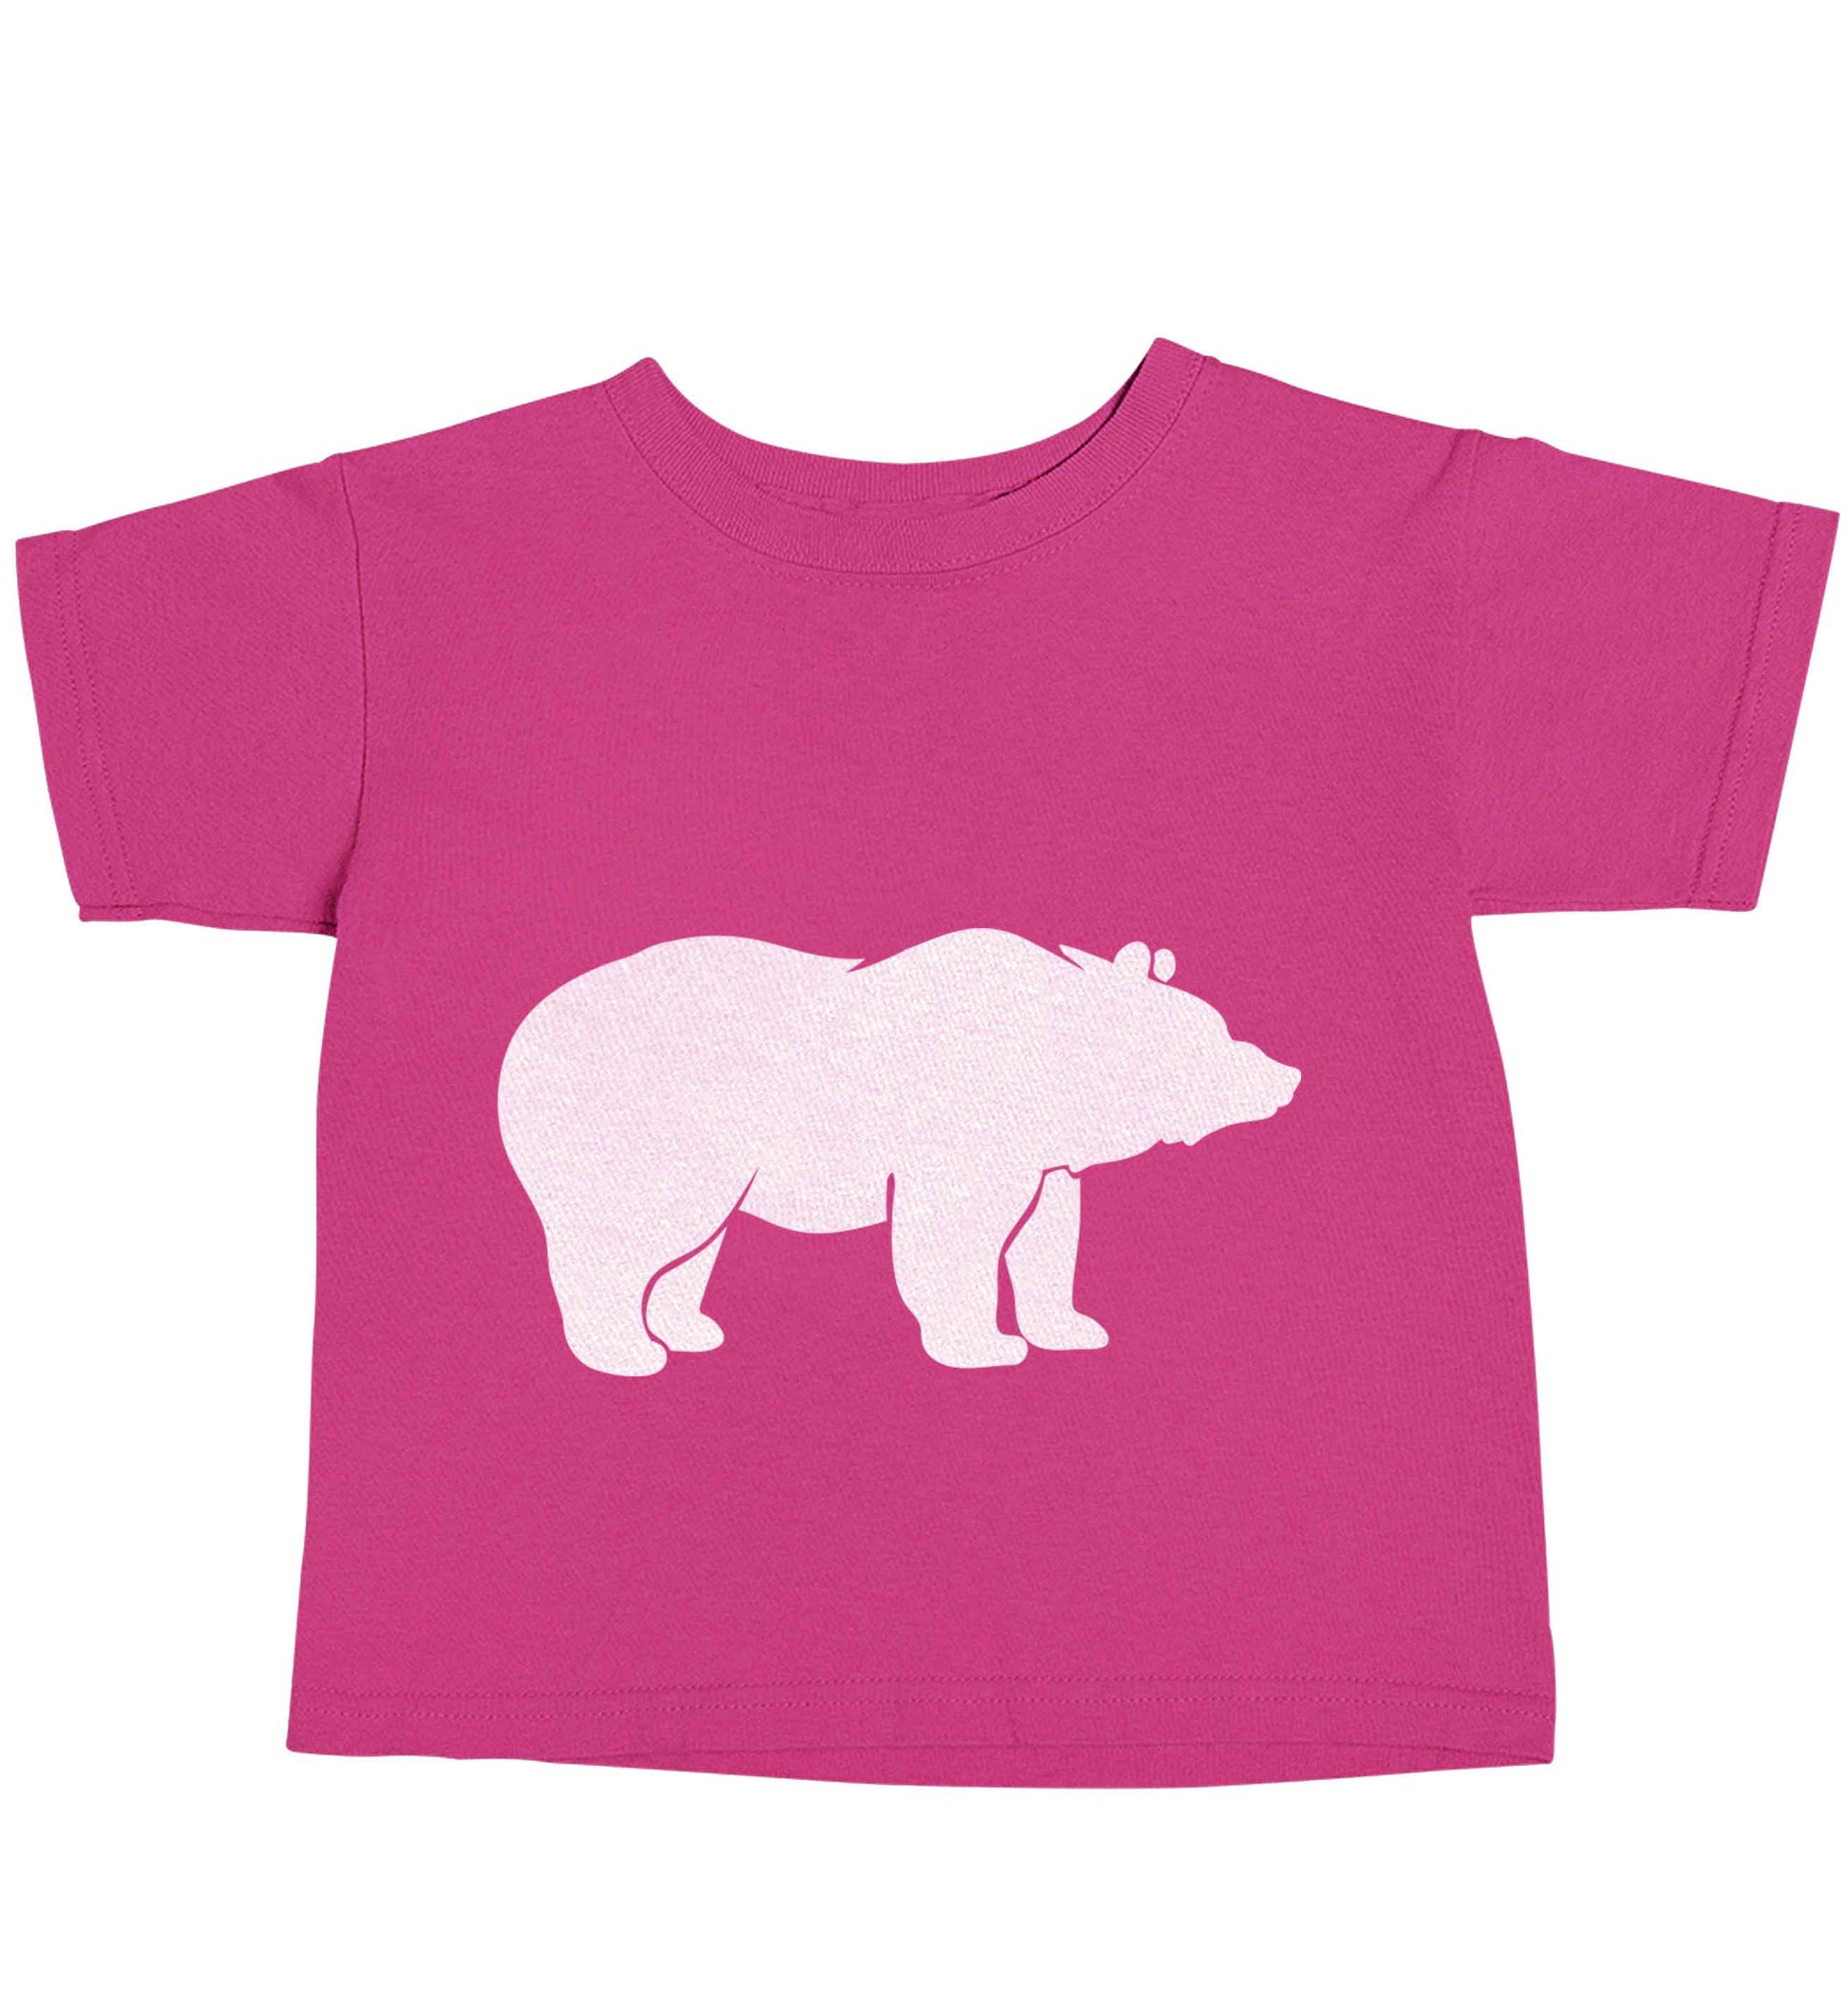 Blue bear pink baby toddler Tshirt 2 Years